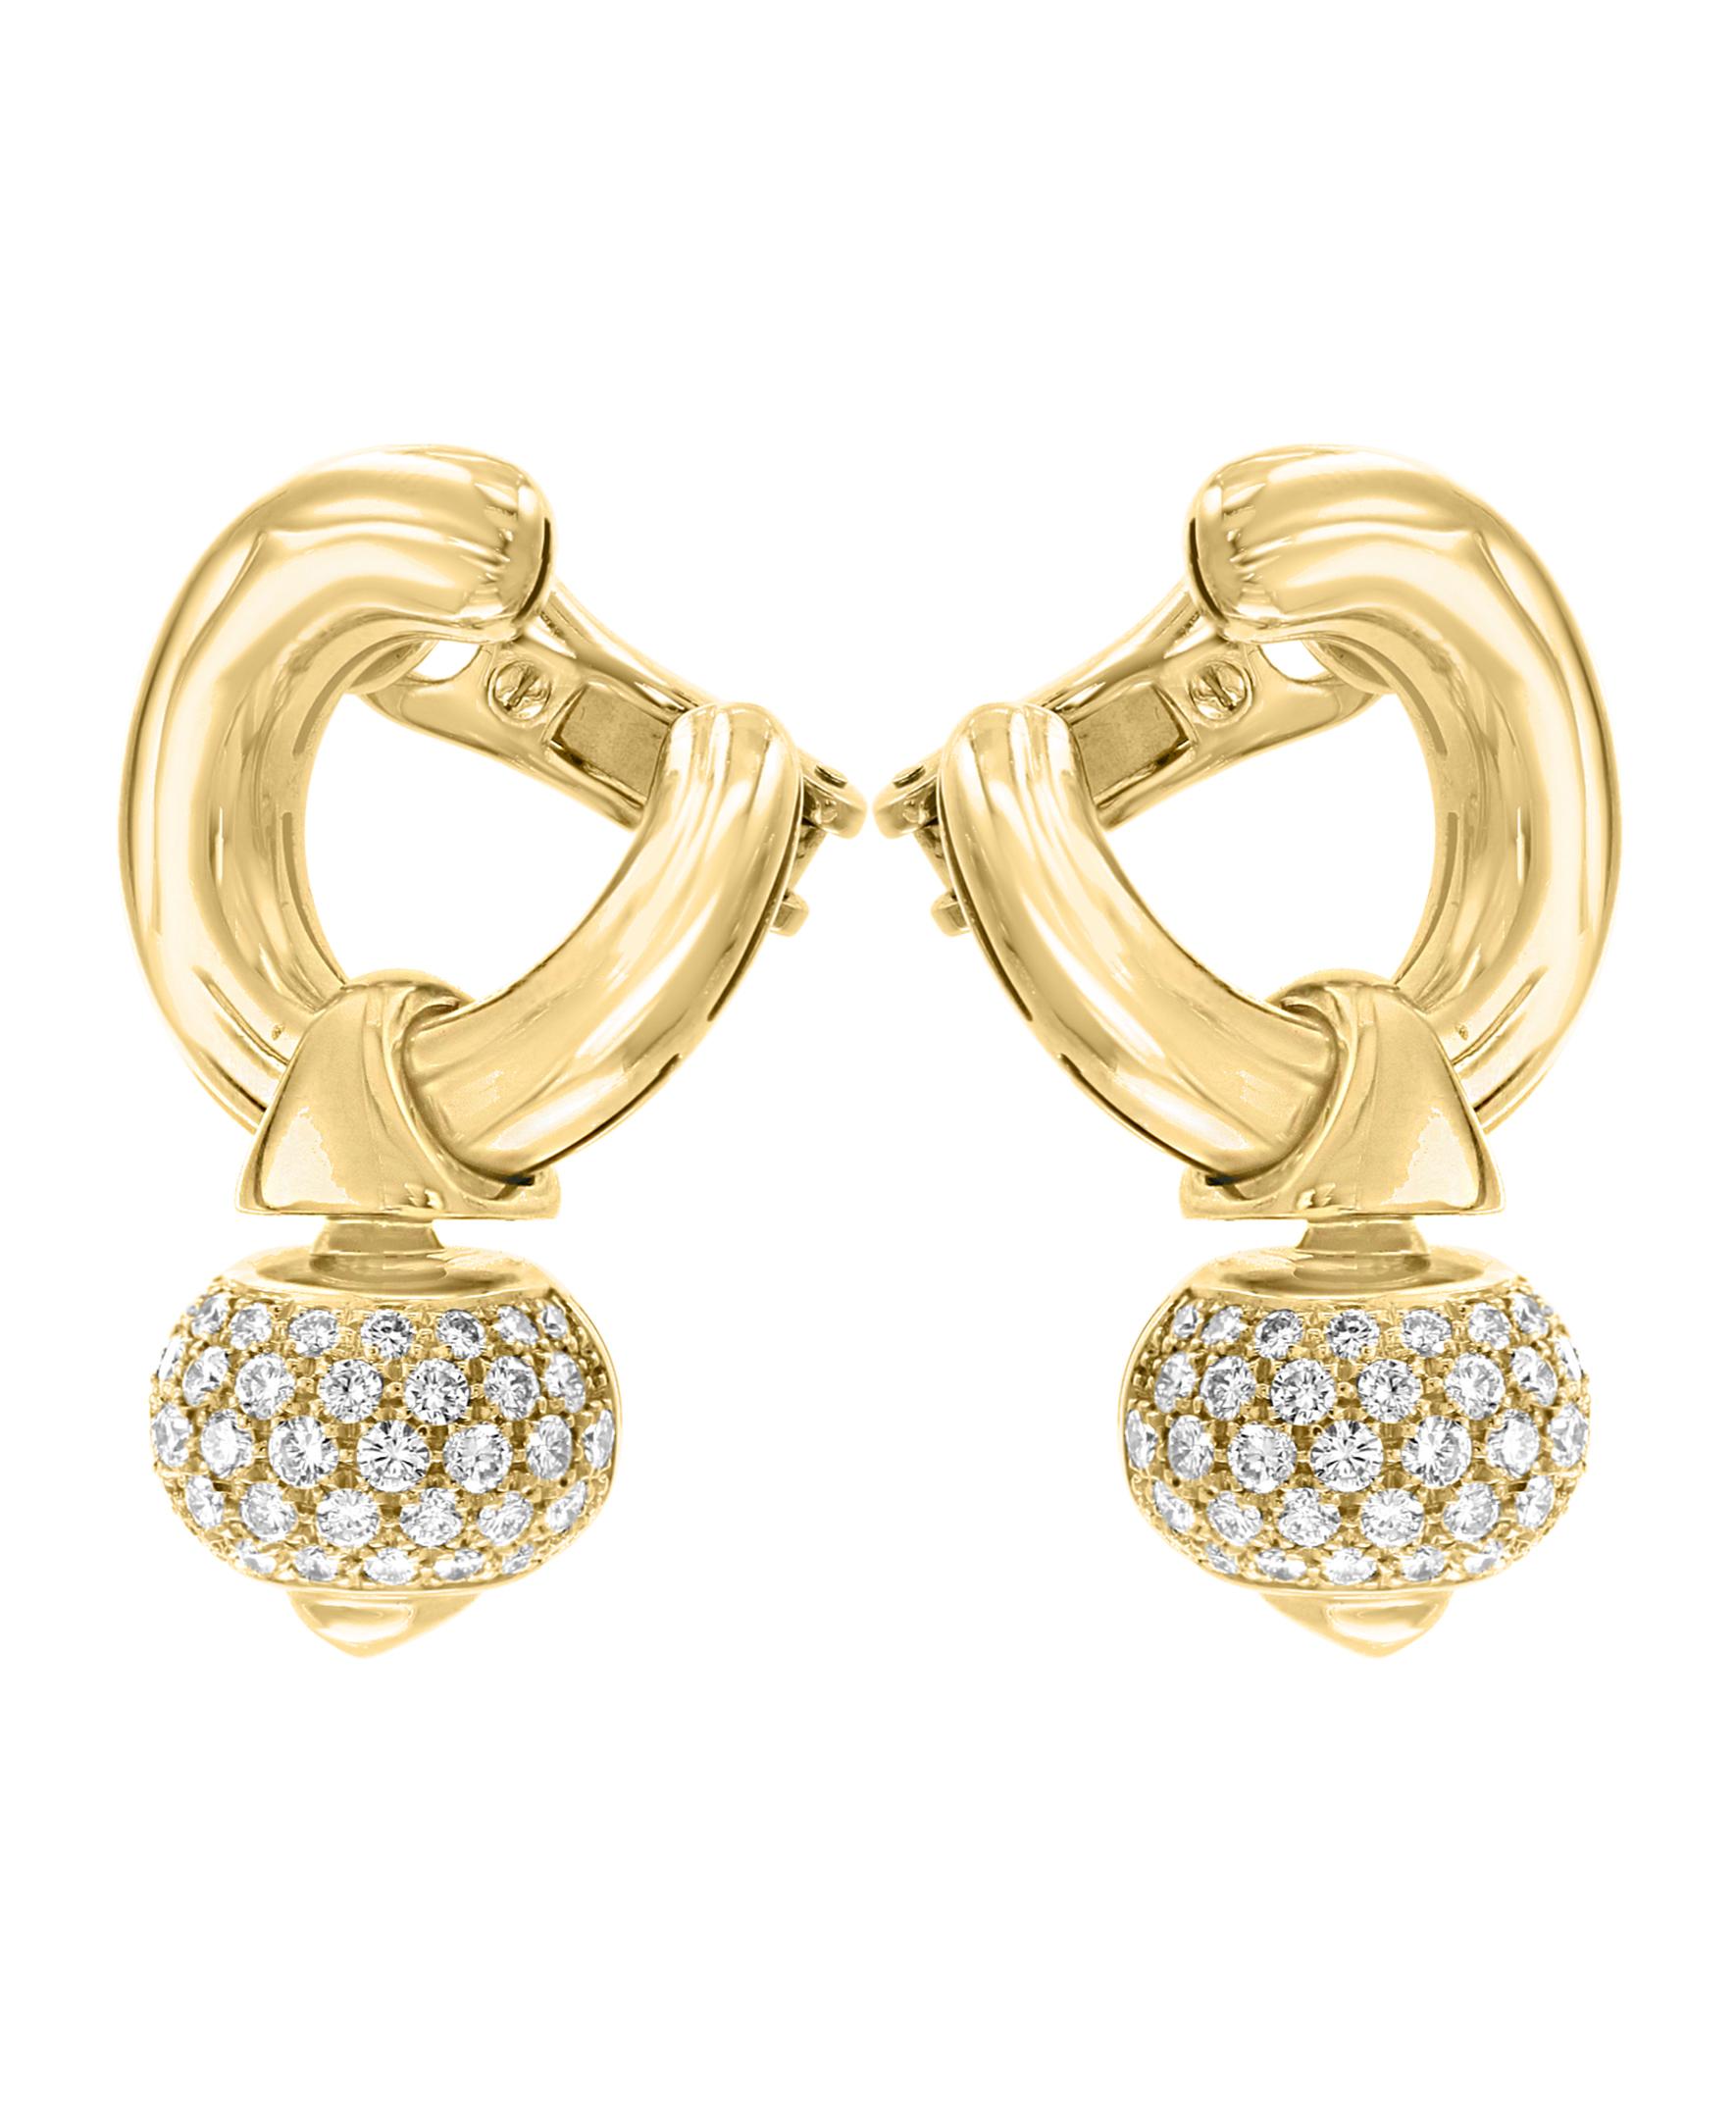 Women's Bulgari Suite Necklace and Earrings in 18 Karat Gold and 12 Carat Diamonds